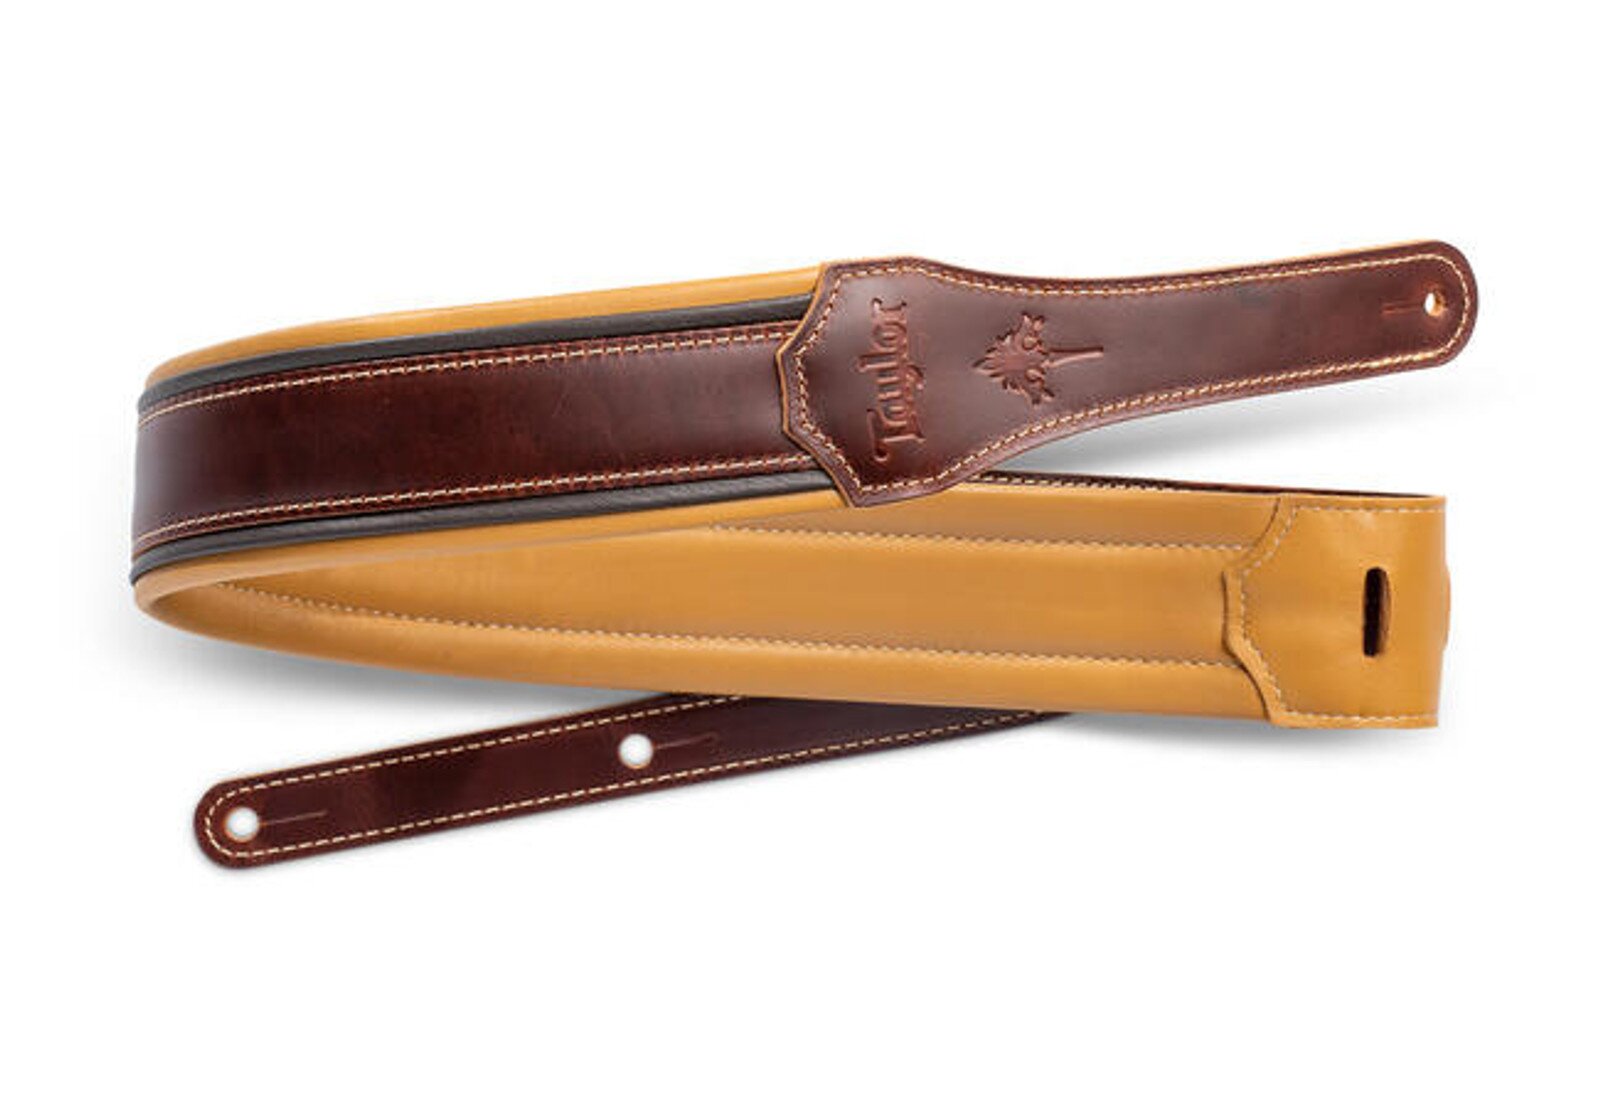 Taylor Ascension Strap,Cordovan Leather, 2.5